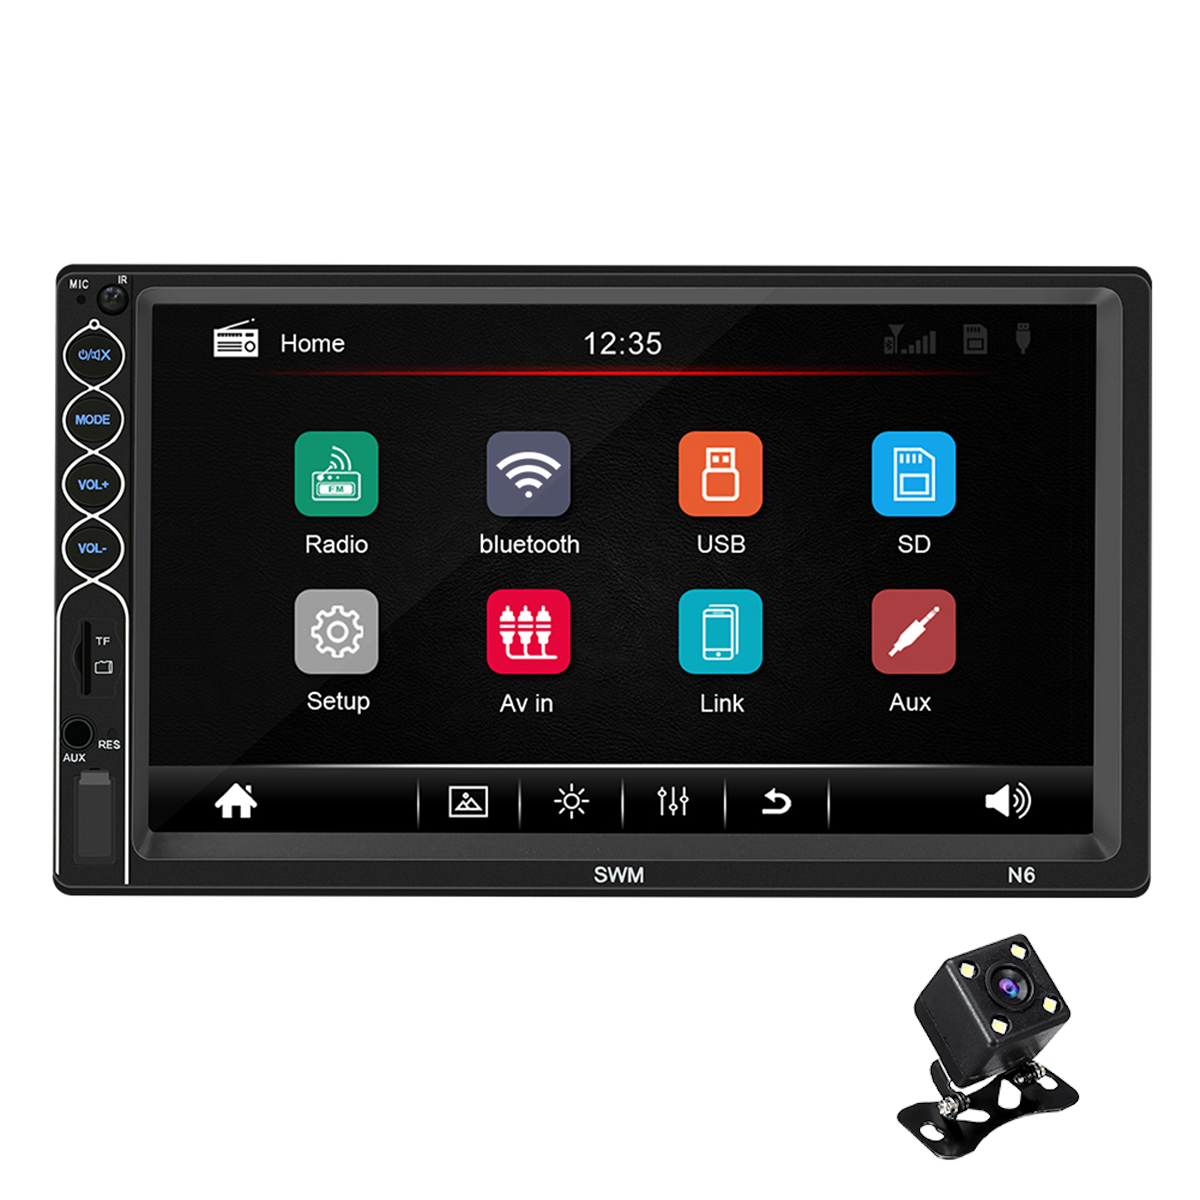 

7 дюймов 2 Din N6 For Wince Авто Радио Stereo MP5 Player 1 + 16G Bluetooth GPS Сенсорный экран HD NAV FM AUX USB с видом